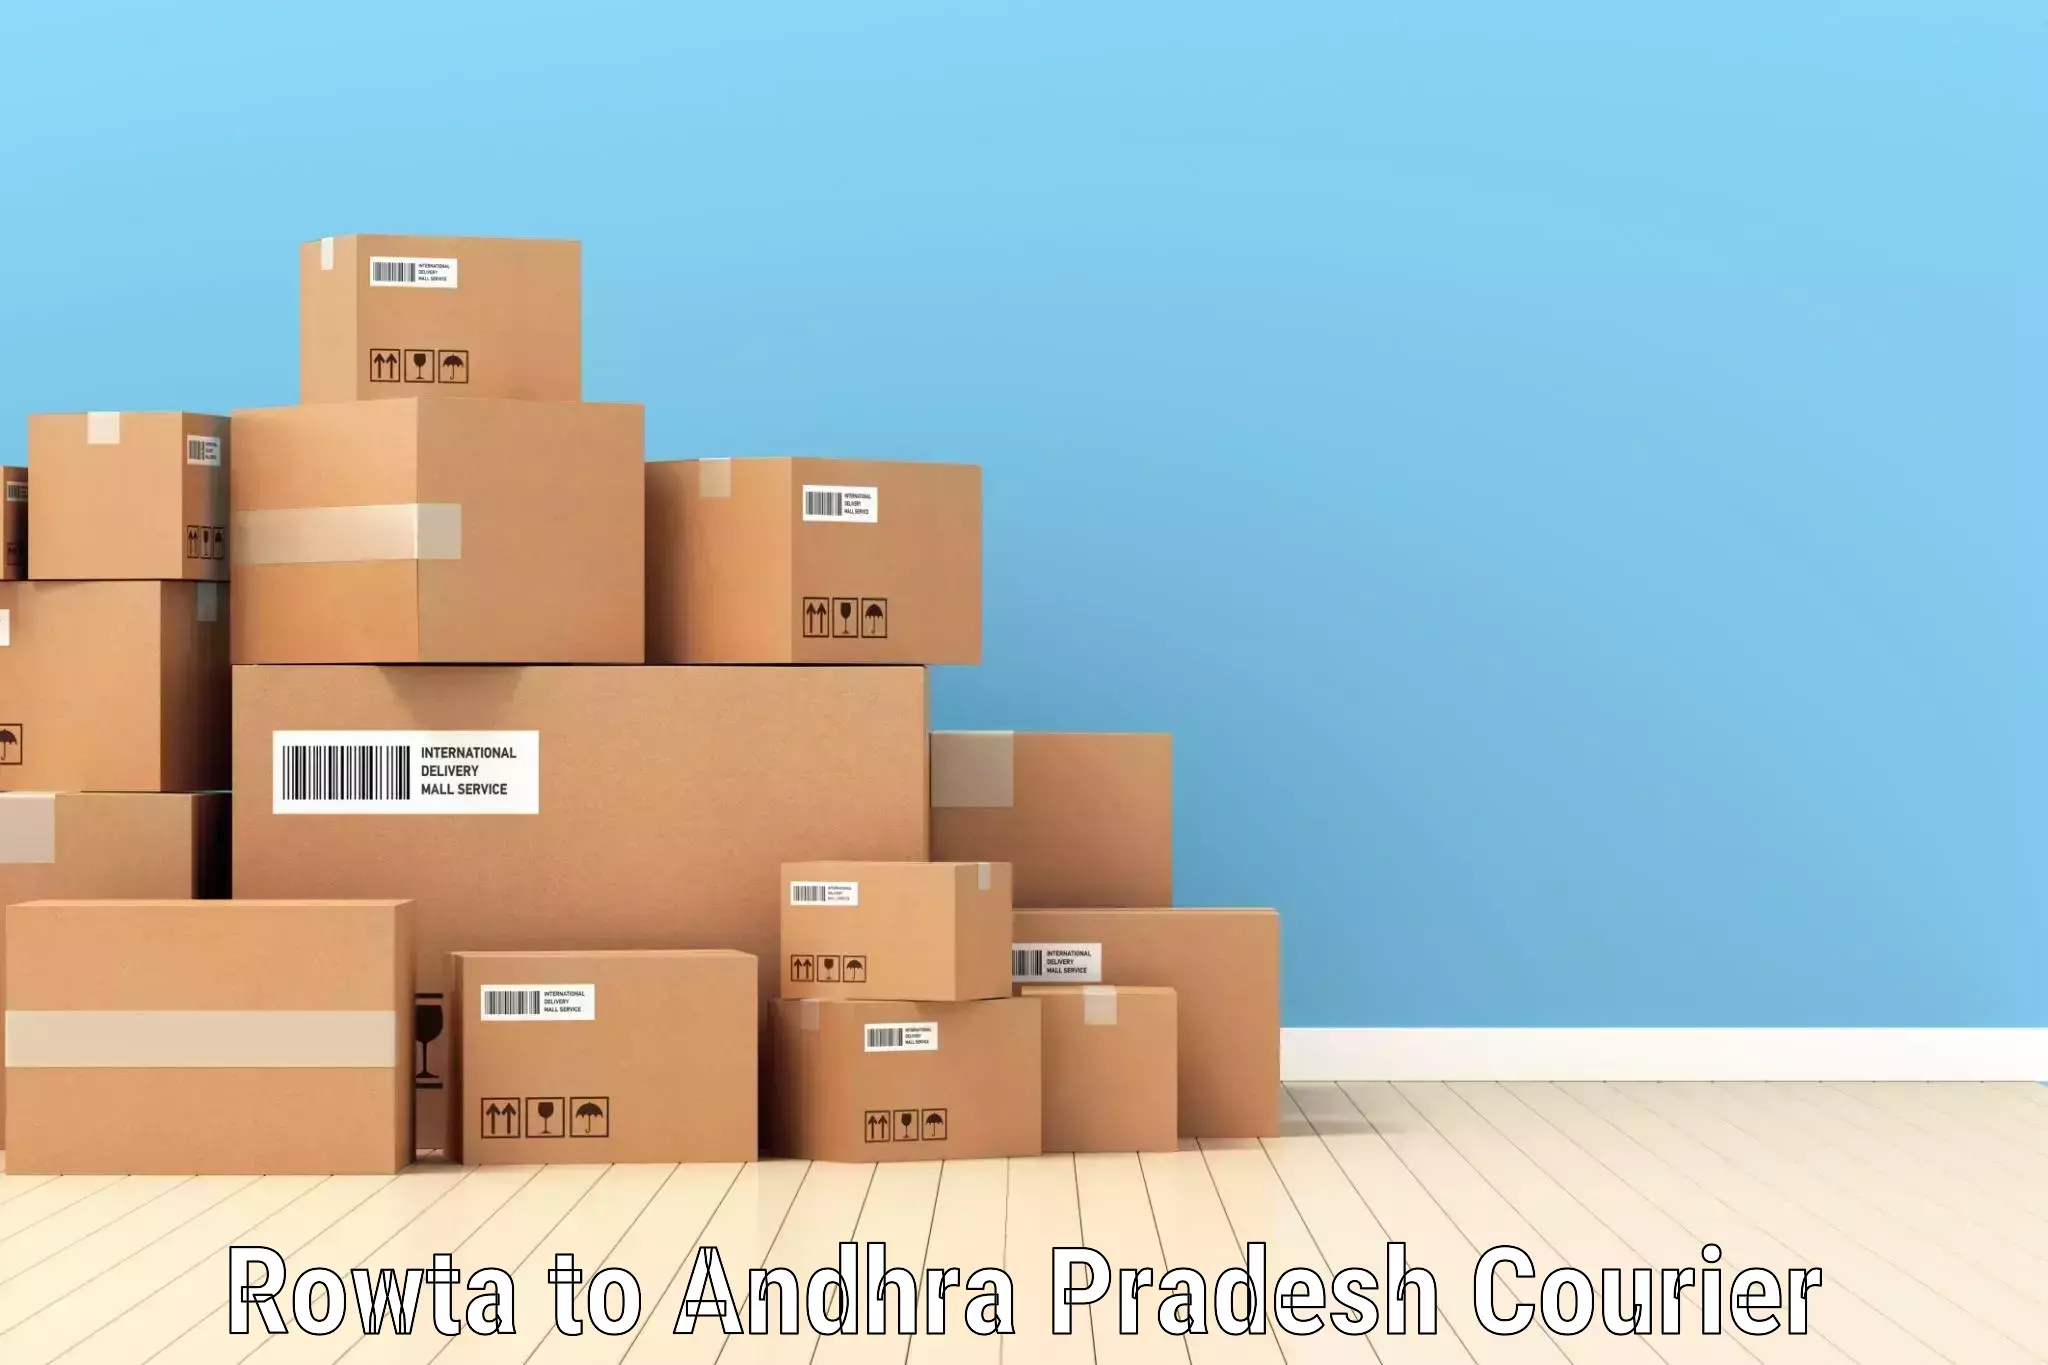 Courier service partnerships Rowta to Andhra Pradesh